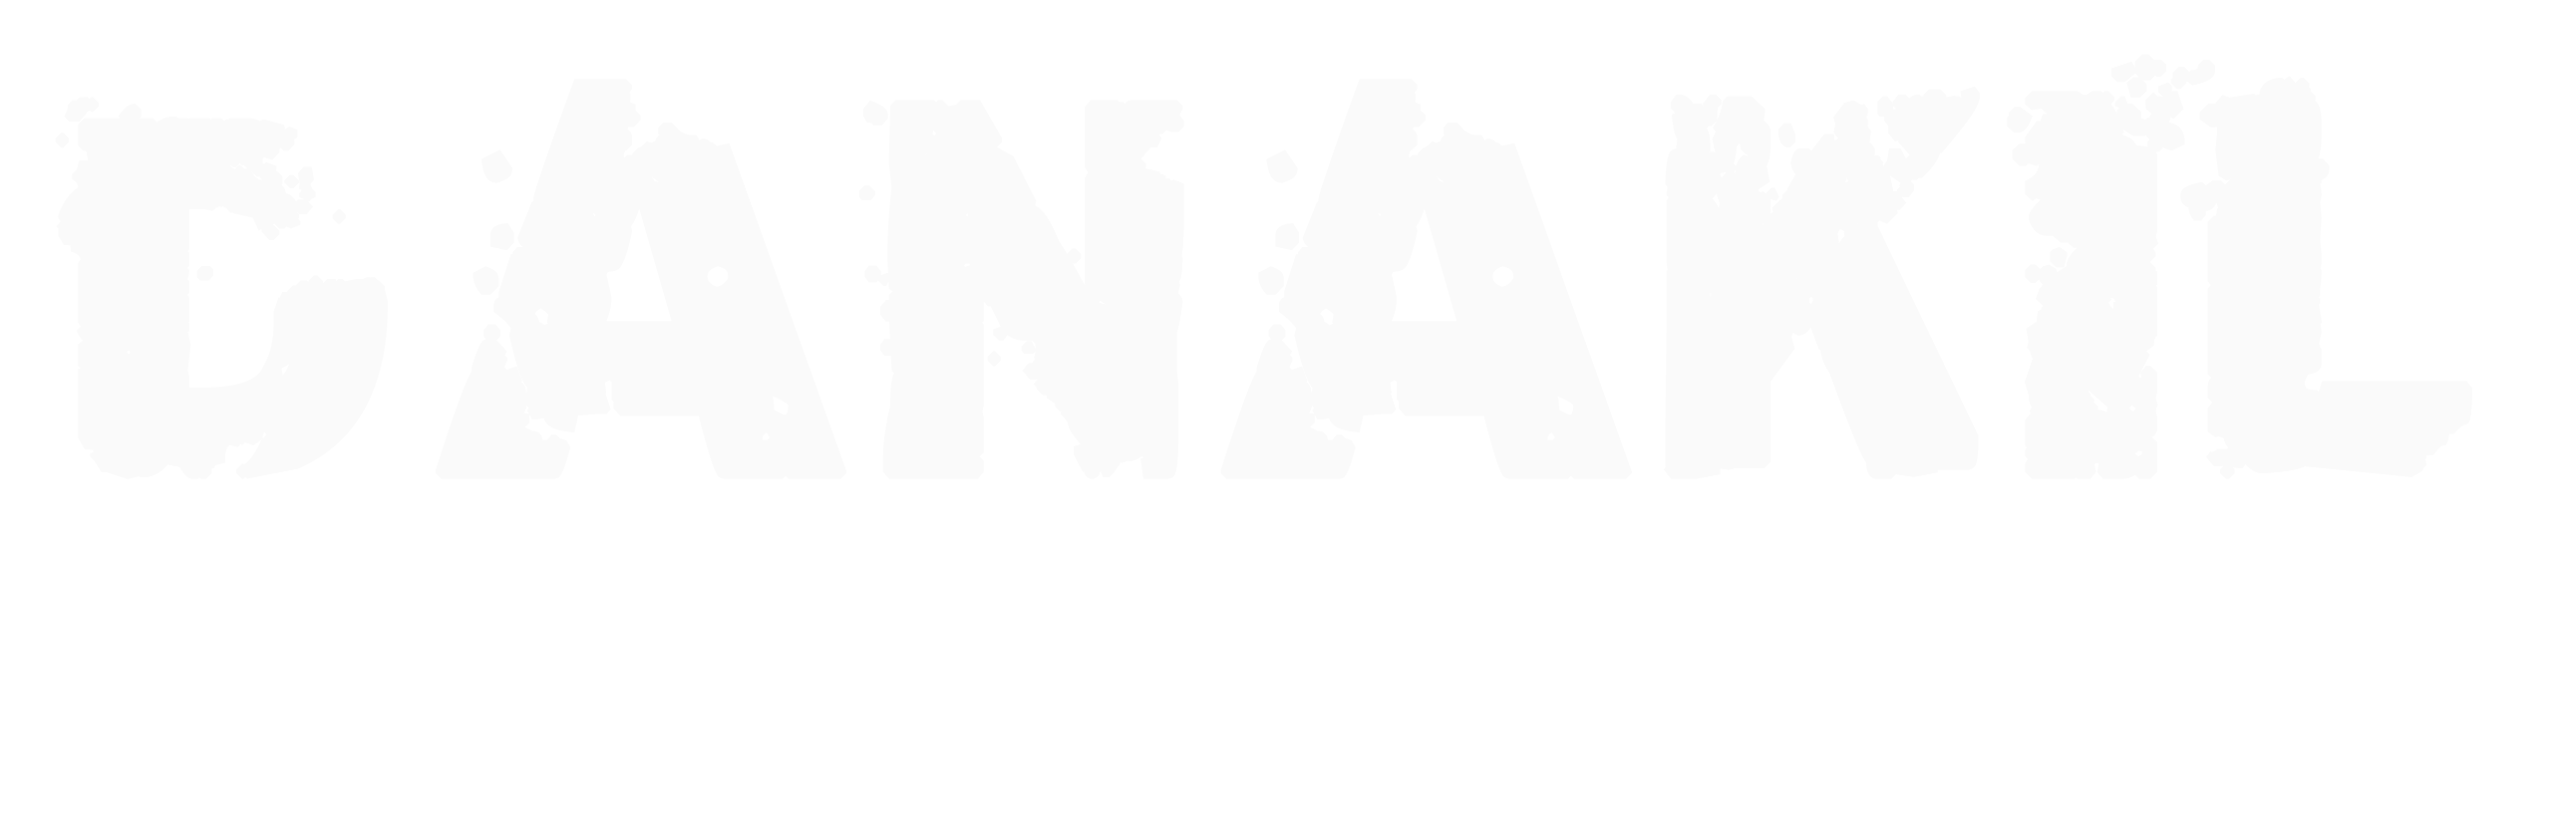 Danakil Depression Tour